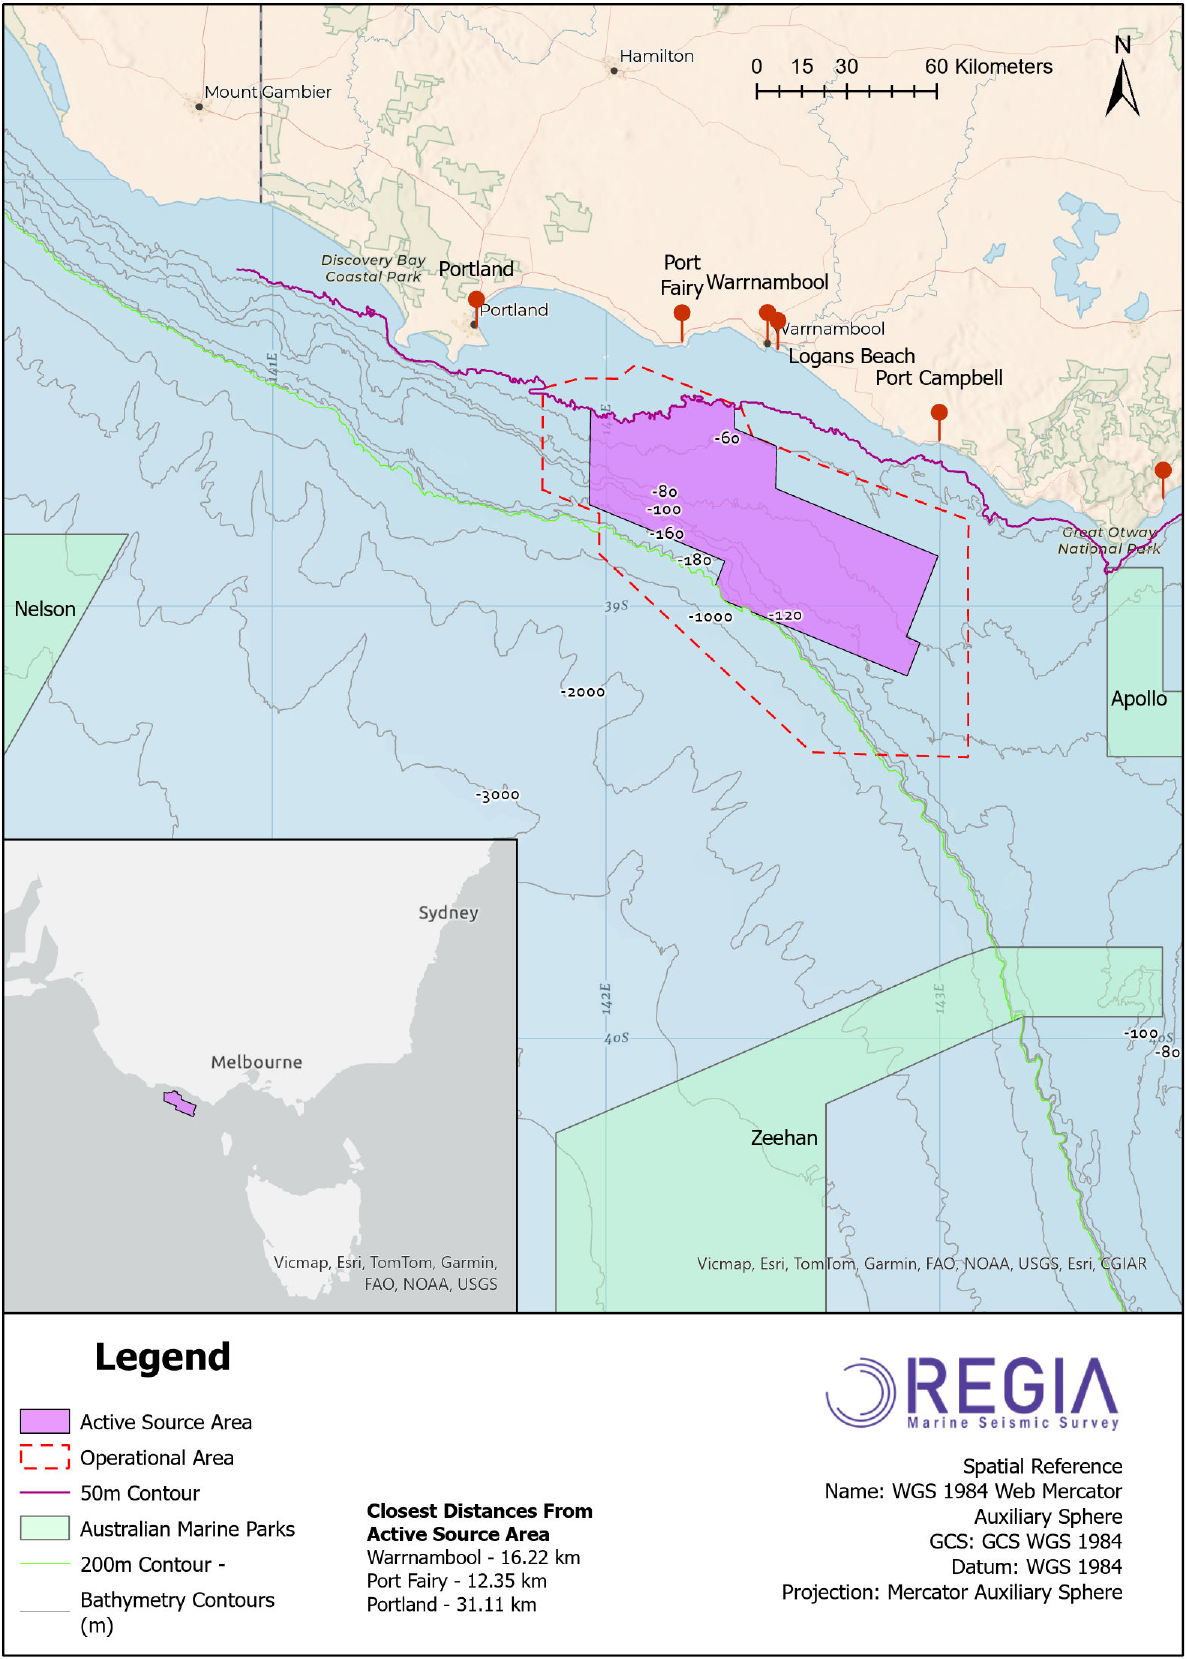 Regis seismic survey location map